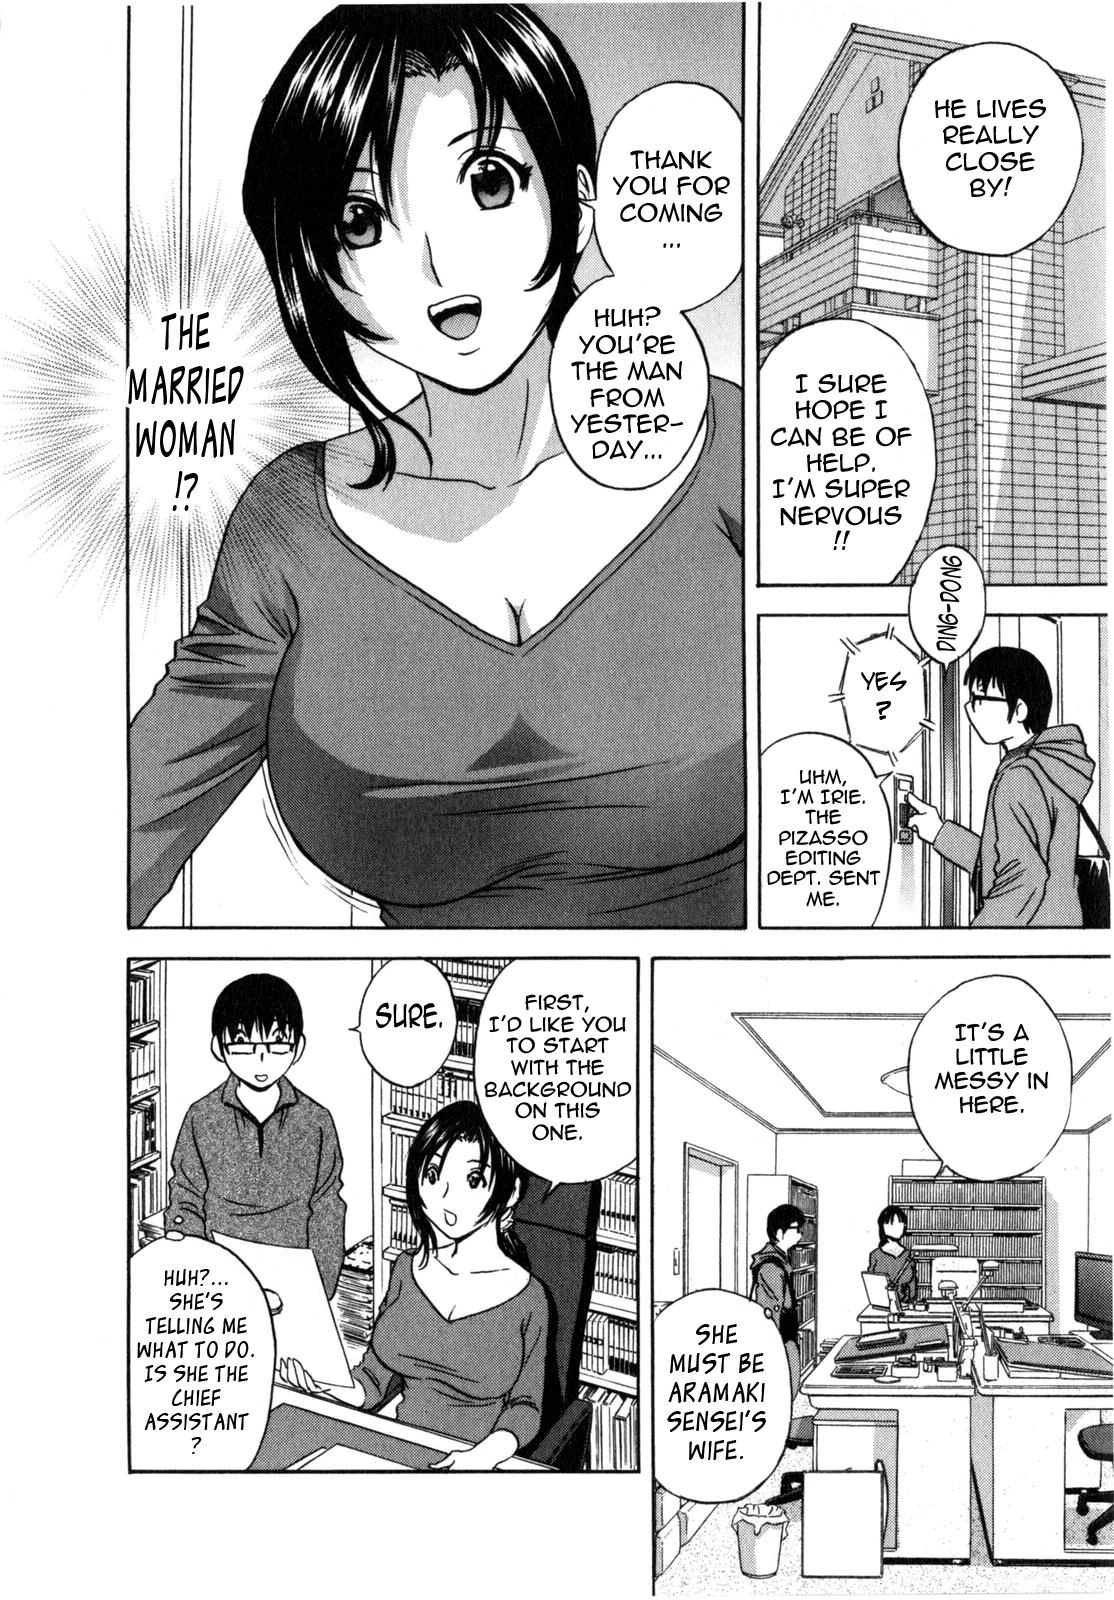 Life with Married Women Just Like a Manga 1 - Ch. 1 12